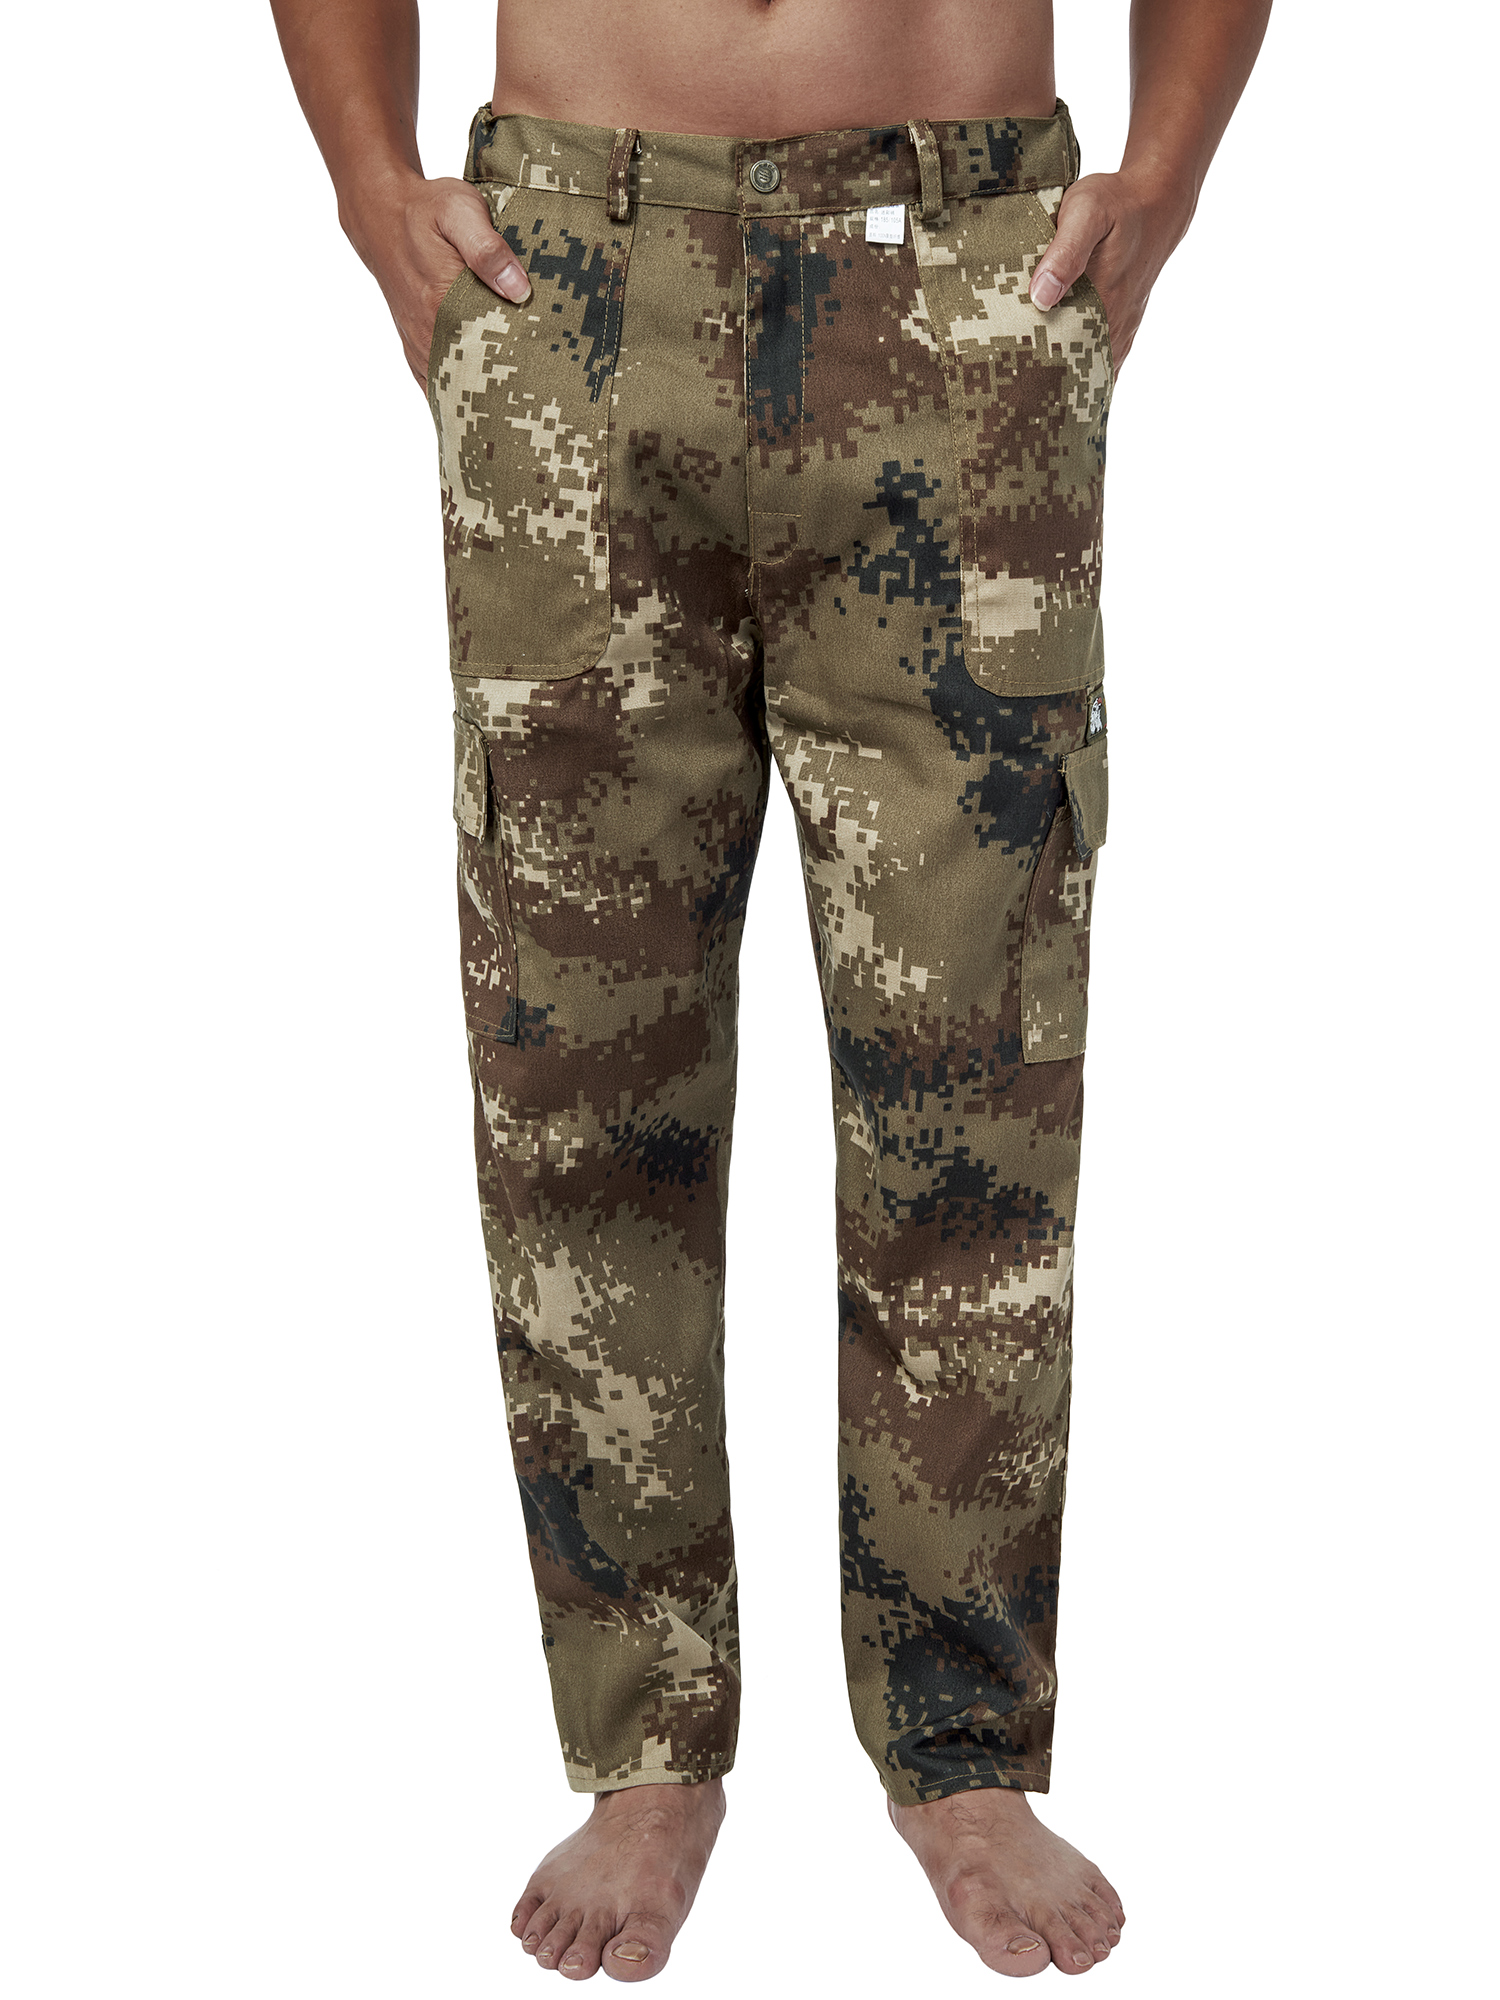 FOCUSSEXY Men Comfort Cargo Pant Tactical Combat Cargo Pocket Long Pants Work Wear Casual Bottoms Outdoor Camo Stretch Cargo Pants - image 1 of 7